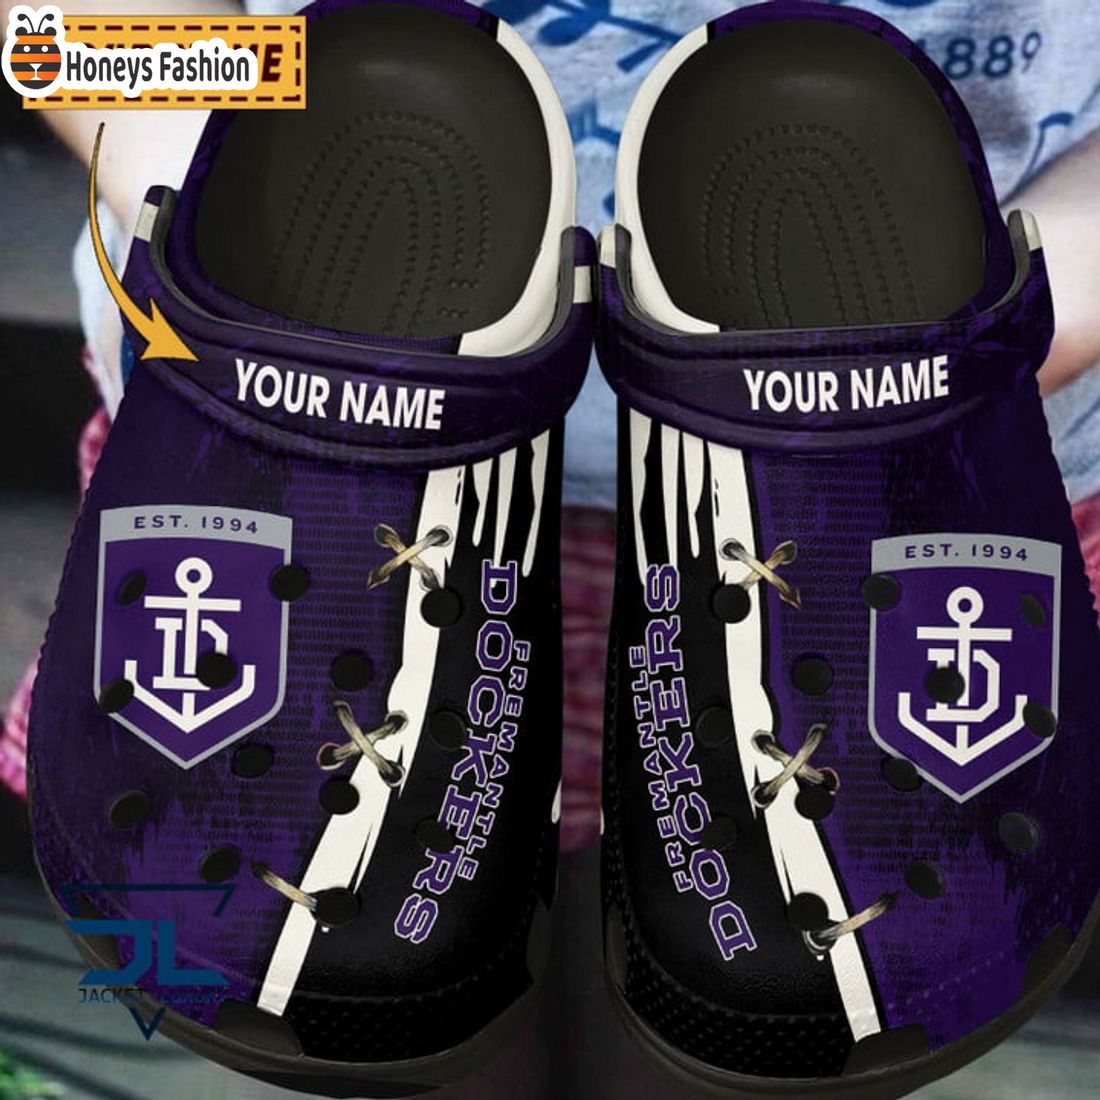 HOT Fremantle Football Club Custom Name Crocs Clog Shoes